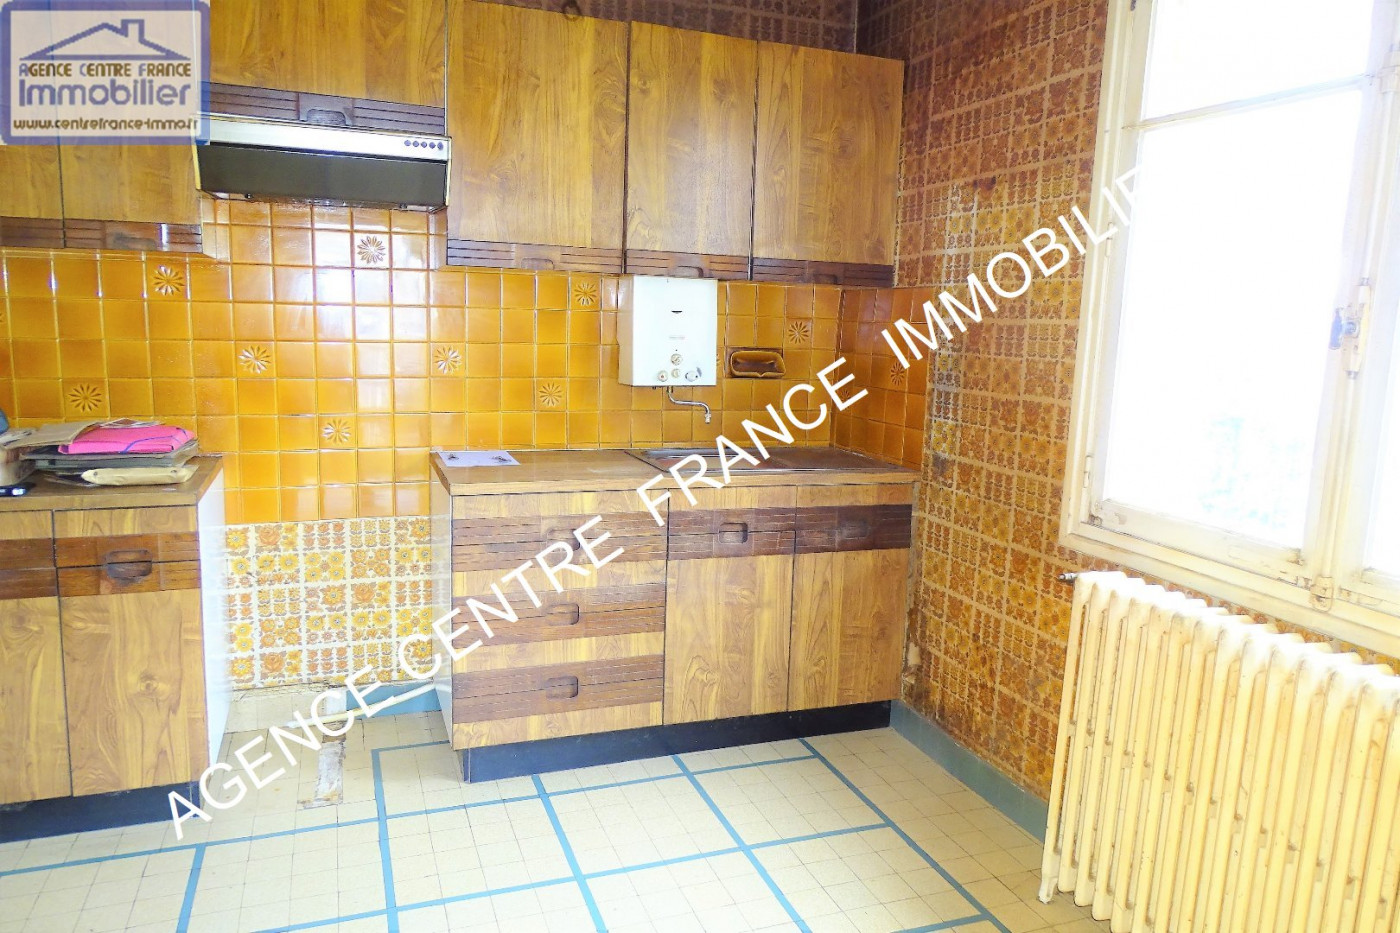 A vendre  Bourges | Réf 030011489 - Agence centre france immobilier